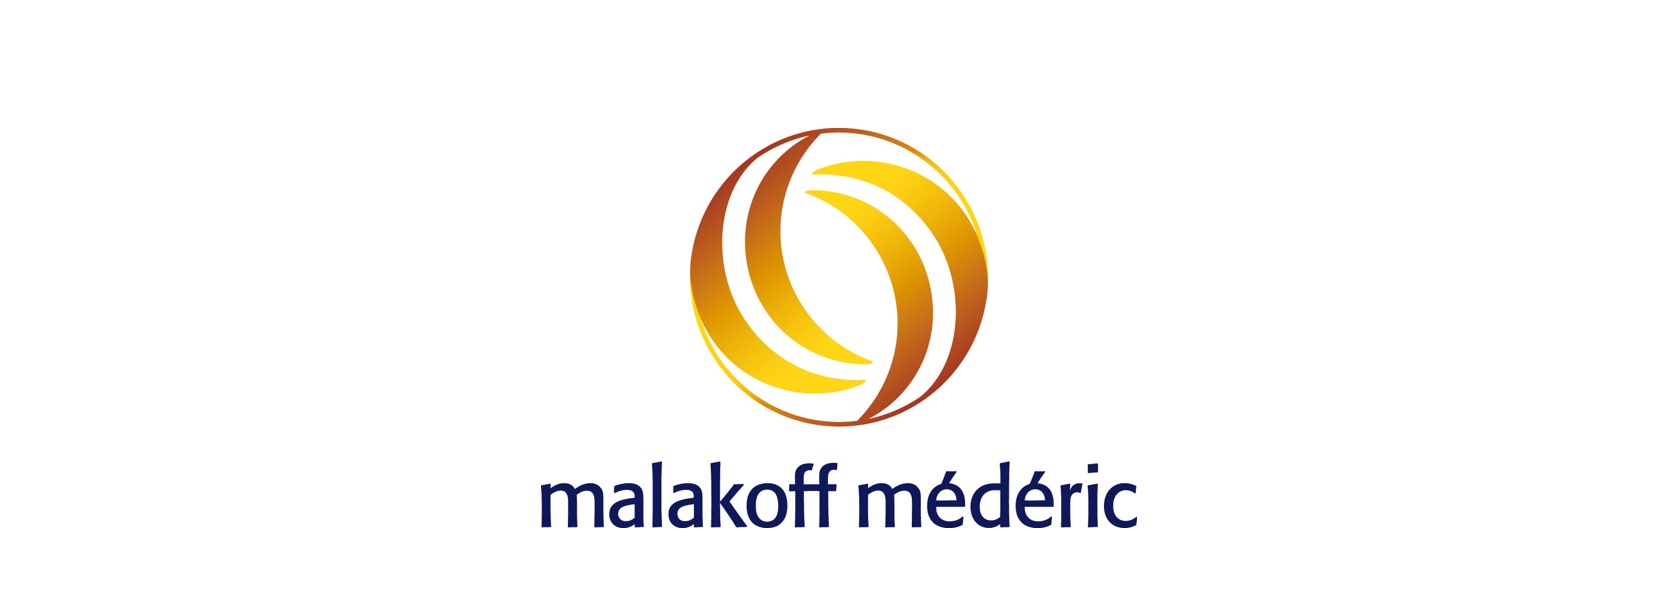 malakoff méderic 